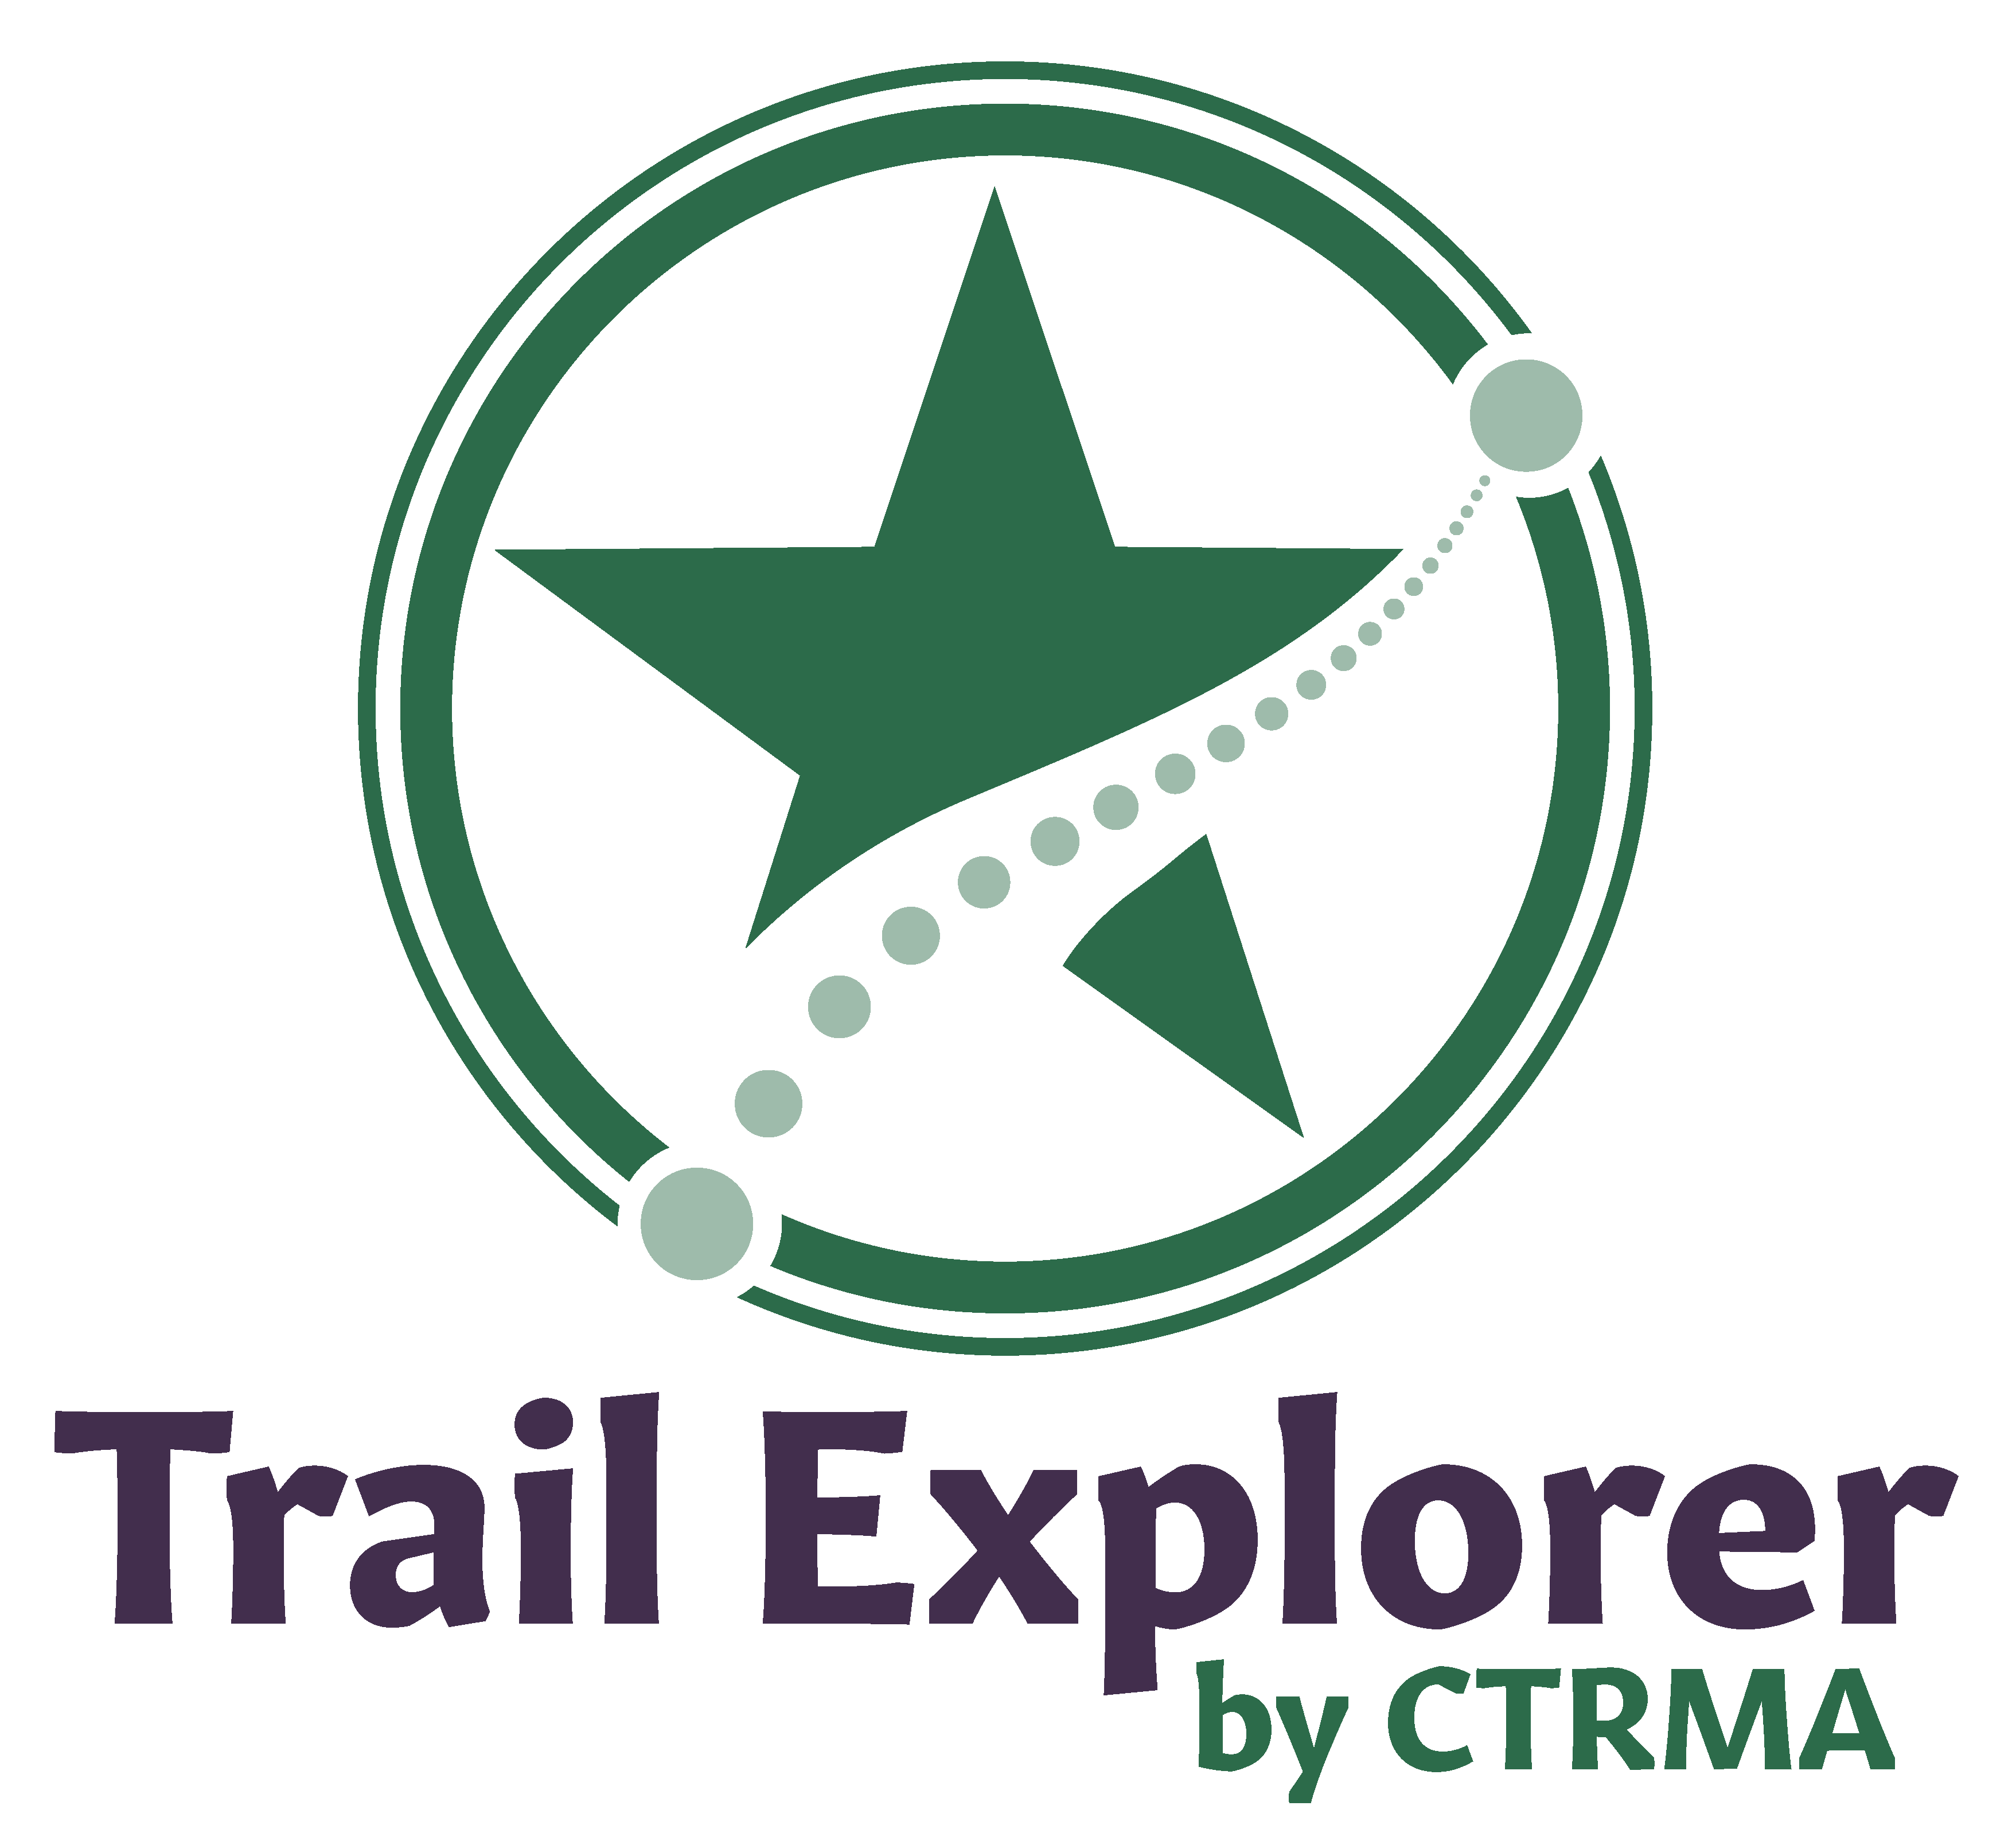 Trail Explorer By CTRMA